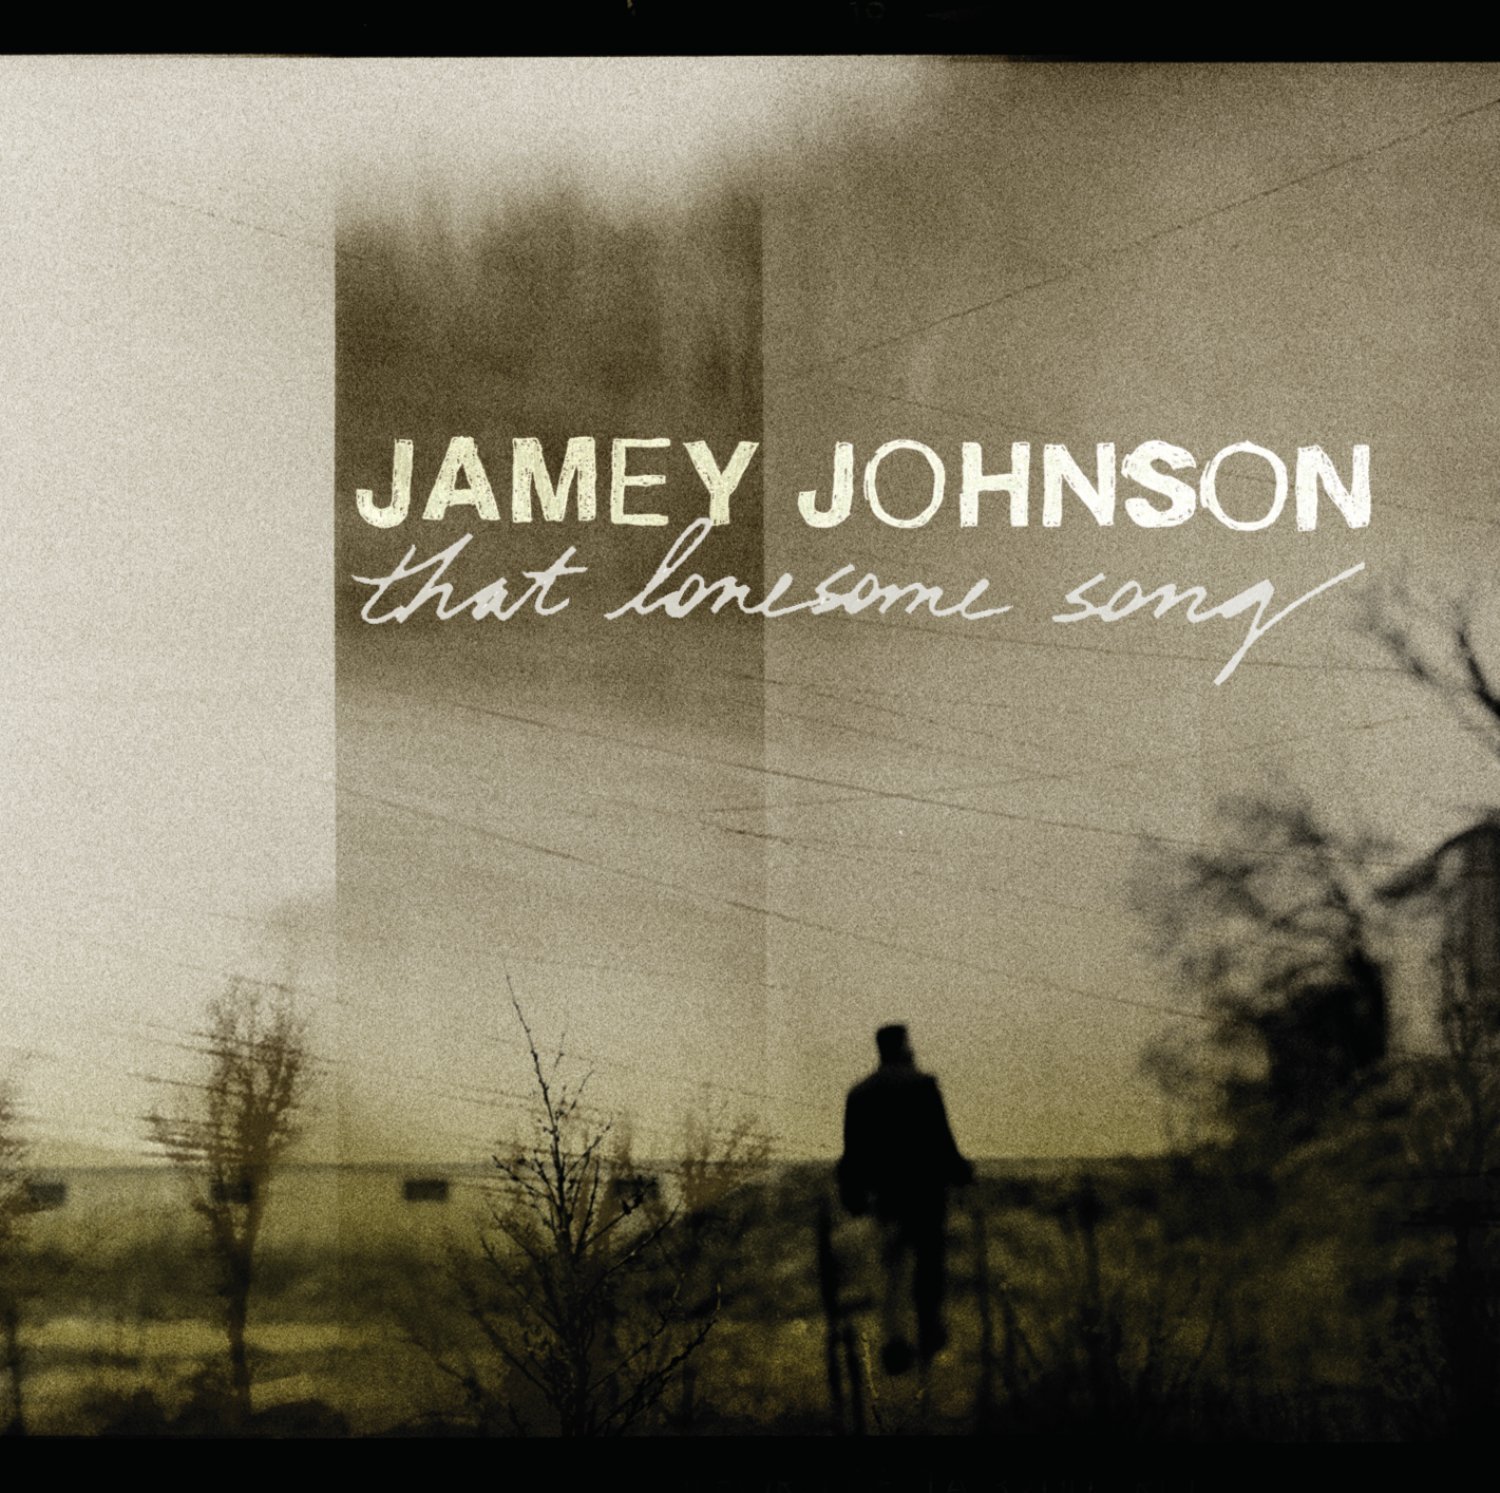 Jamey Johnson - That Lonesome Song [Vinyl] - Amazon.com Music